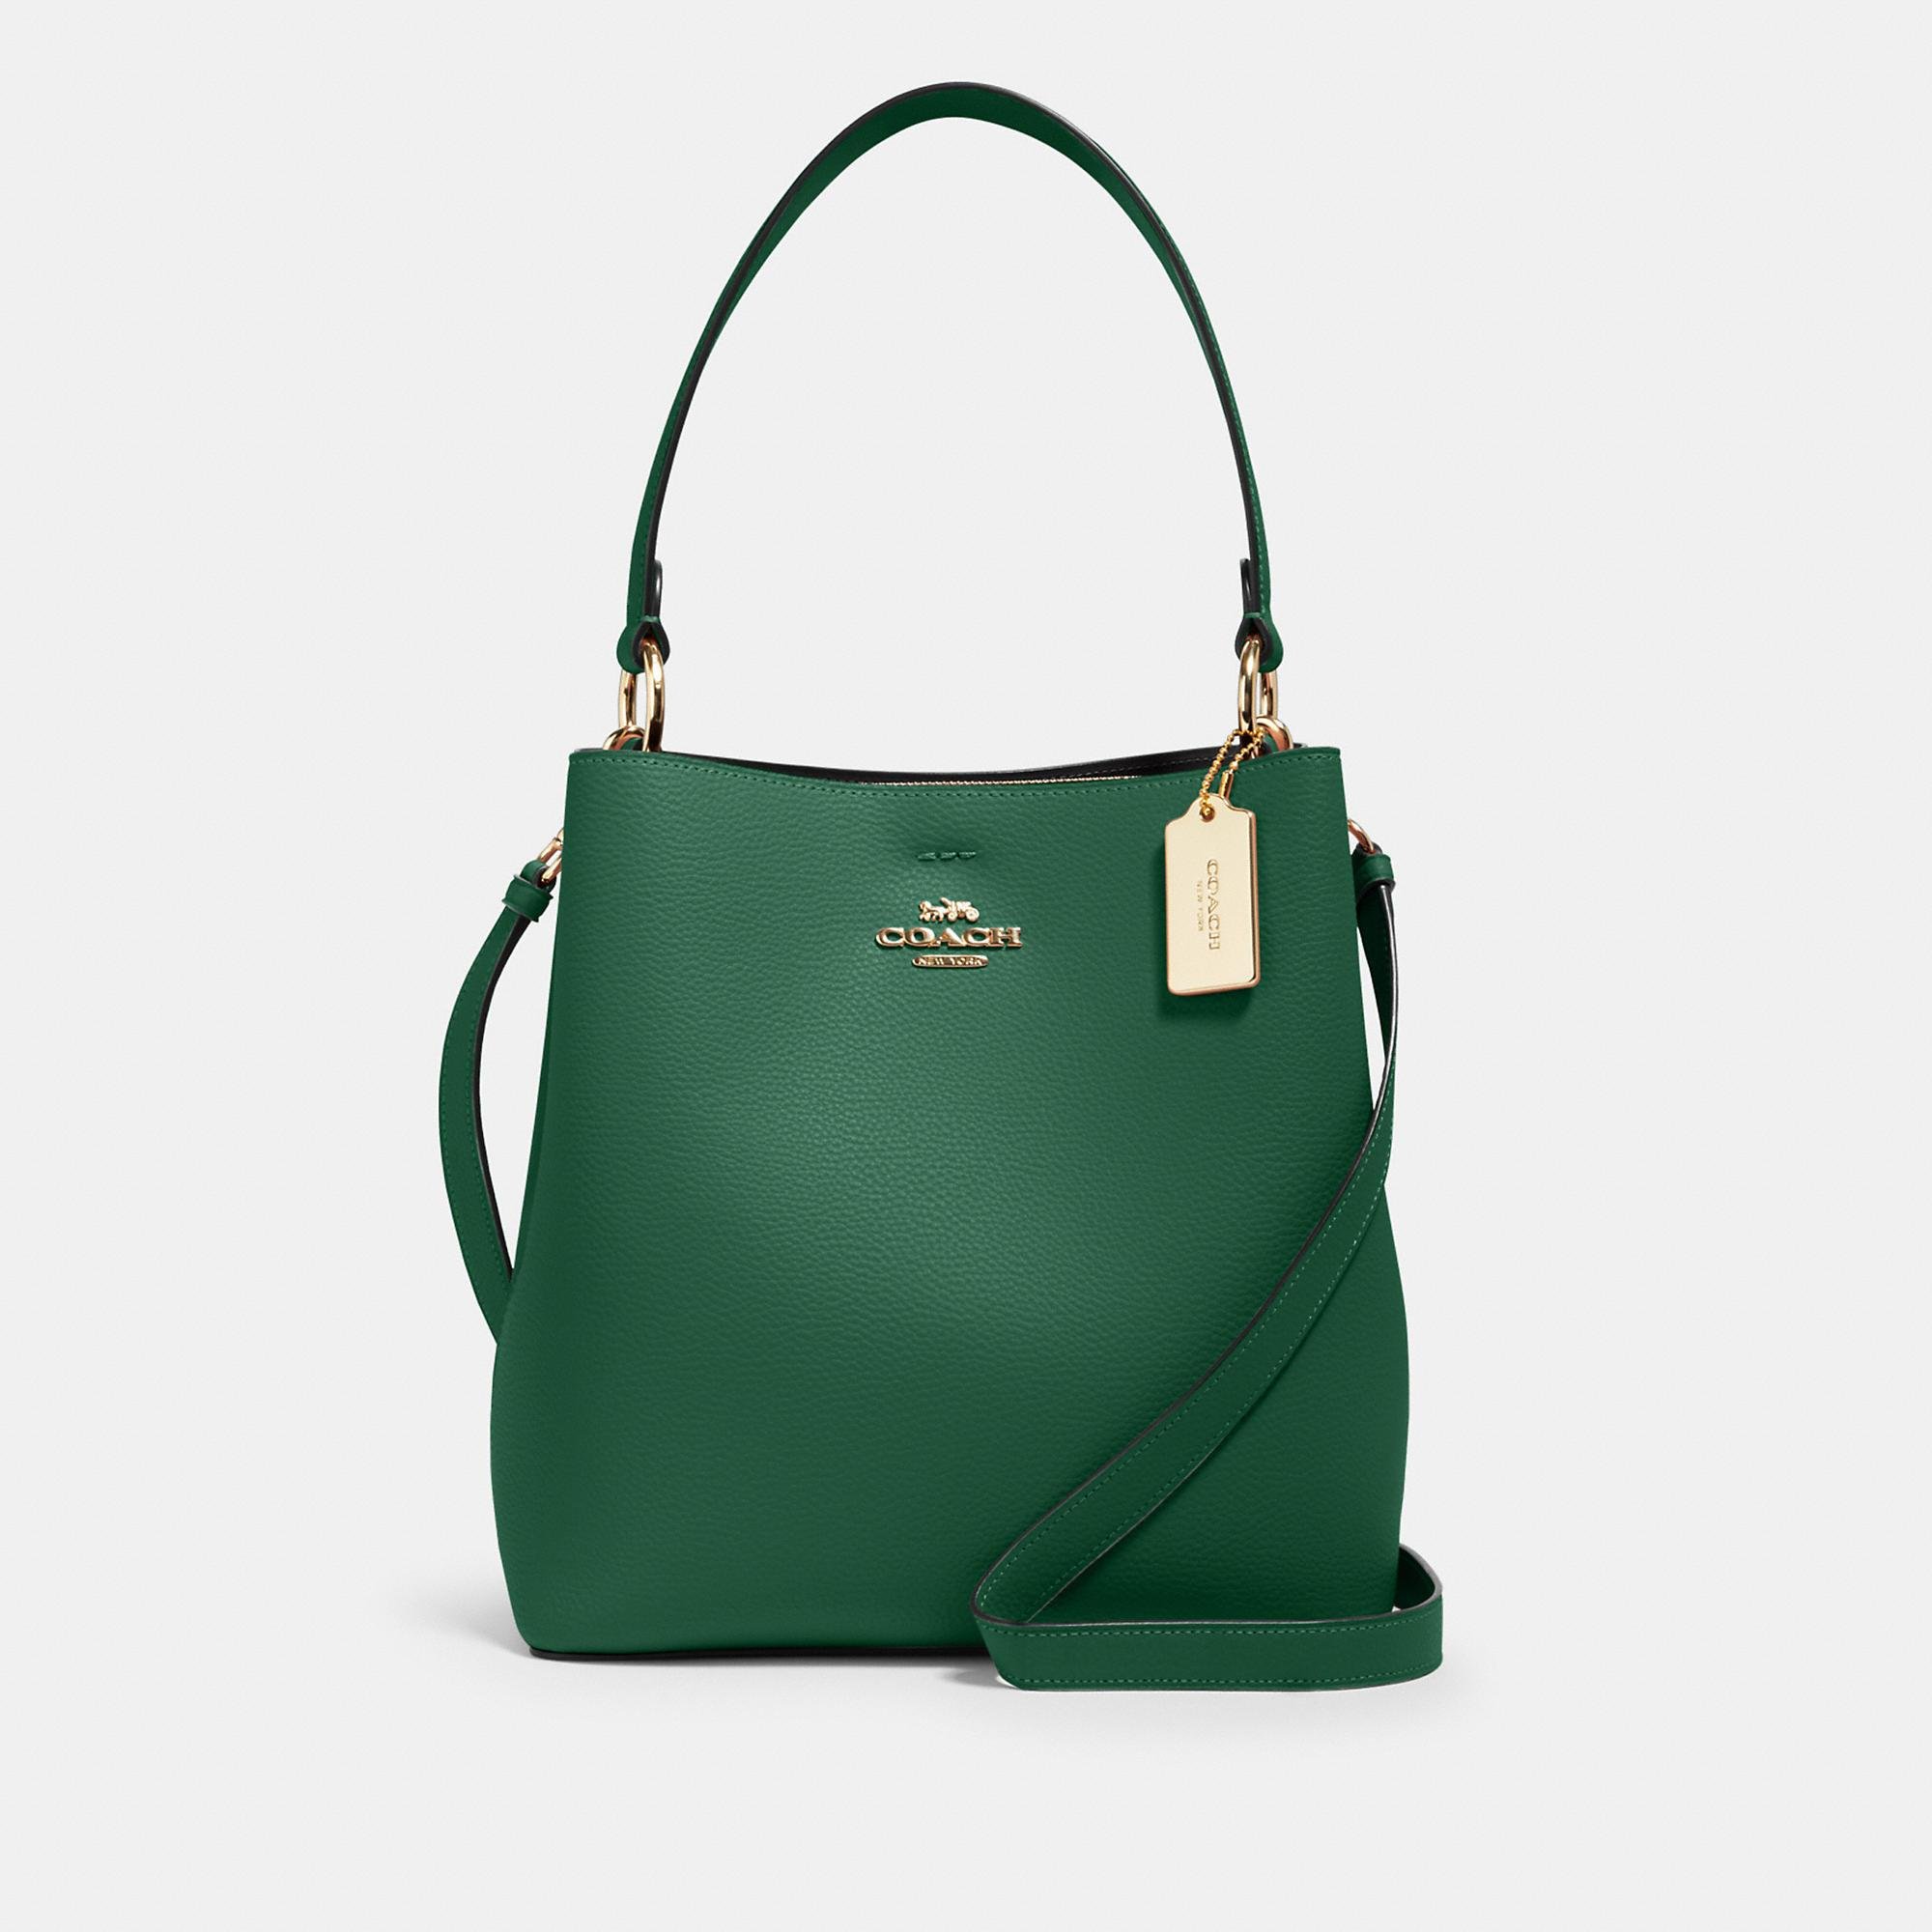 Introducir 90+ imagen green purse coach